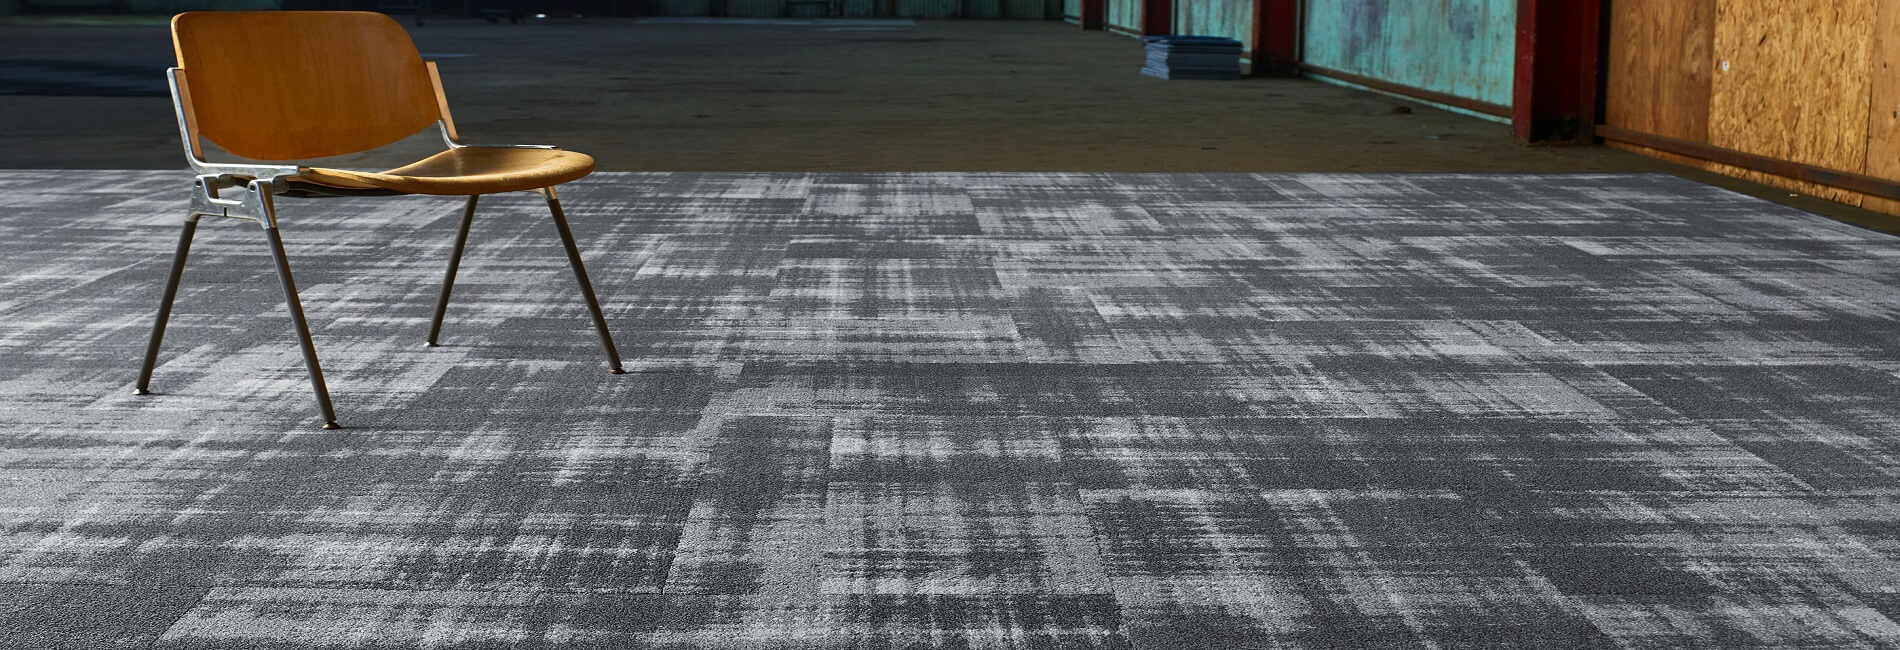 Office Carpet - Carpet Floor Tiles | 12 Foot Broadloom Carpet Rolls